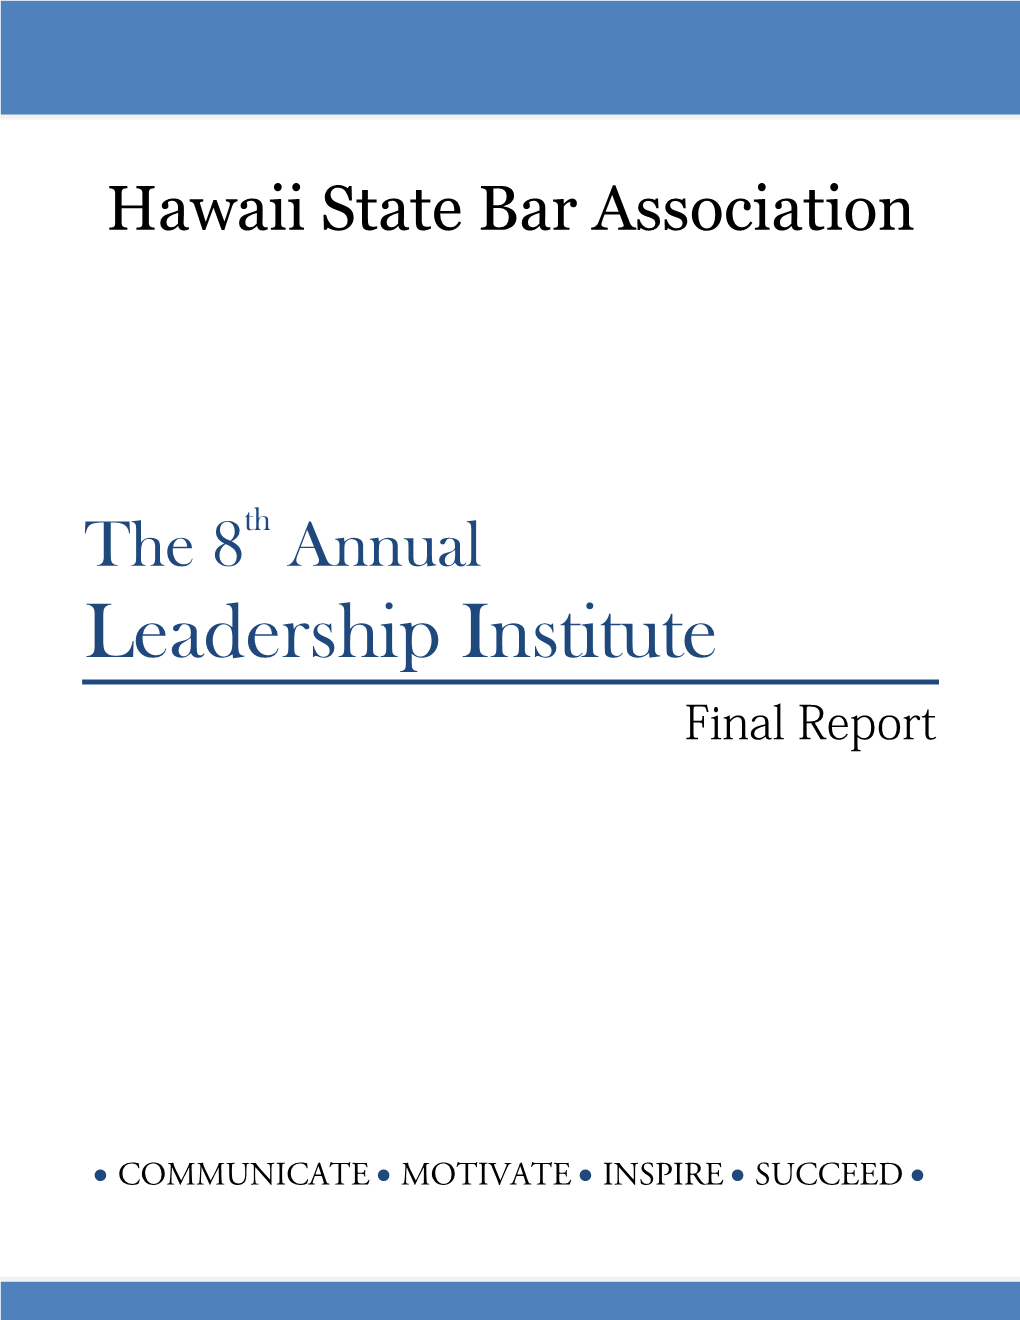 Leadership Institute Final Report